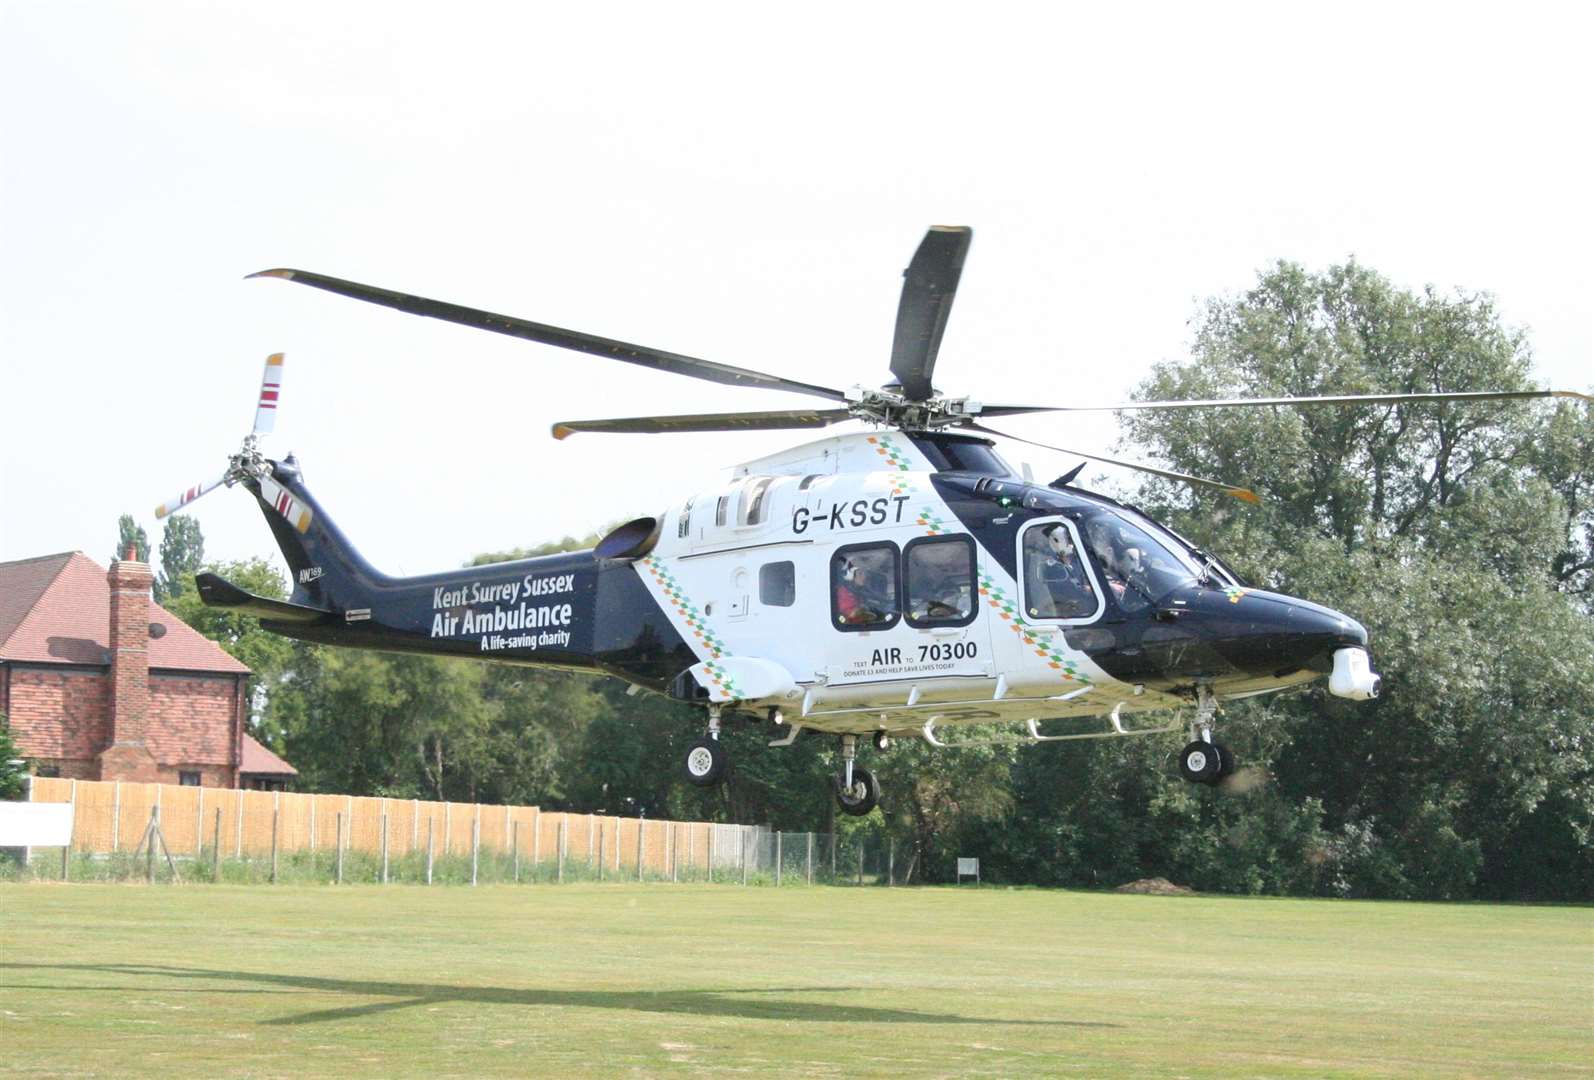 The air ambulance at Willesborough Cricket Club